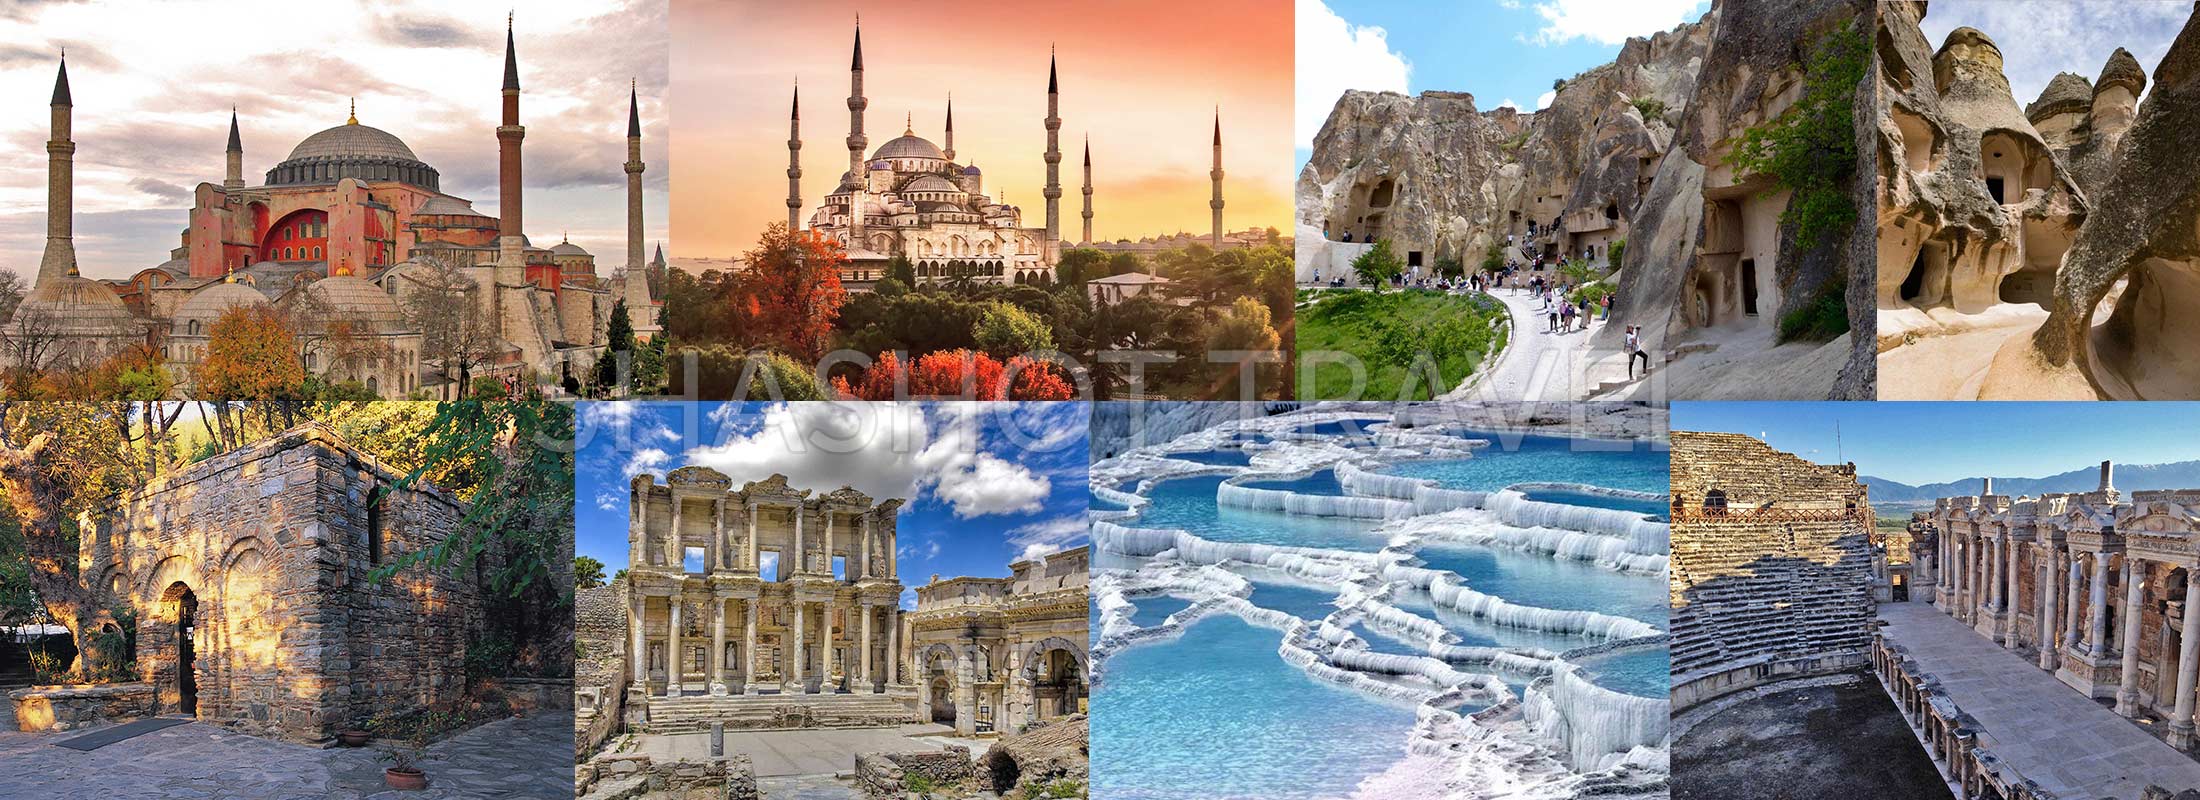 turkey-package-tours-7-days-istanbul-hagia-sophia-museum-blue-mosque-cappadocia-virgin-mary-hourse-ephesus-pamukkale-hierapolis